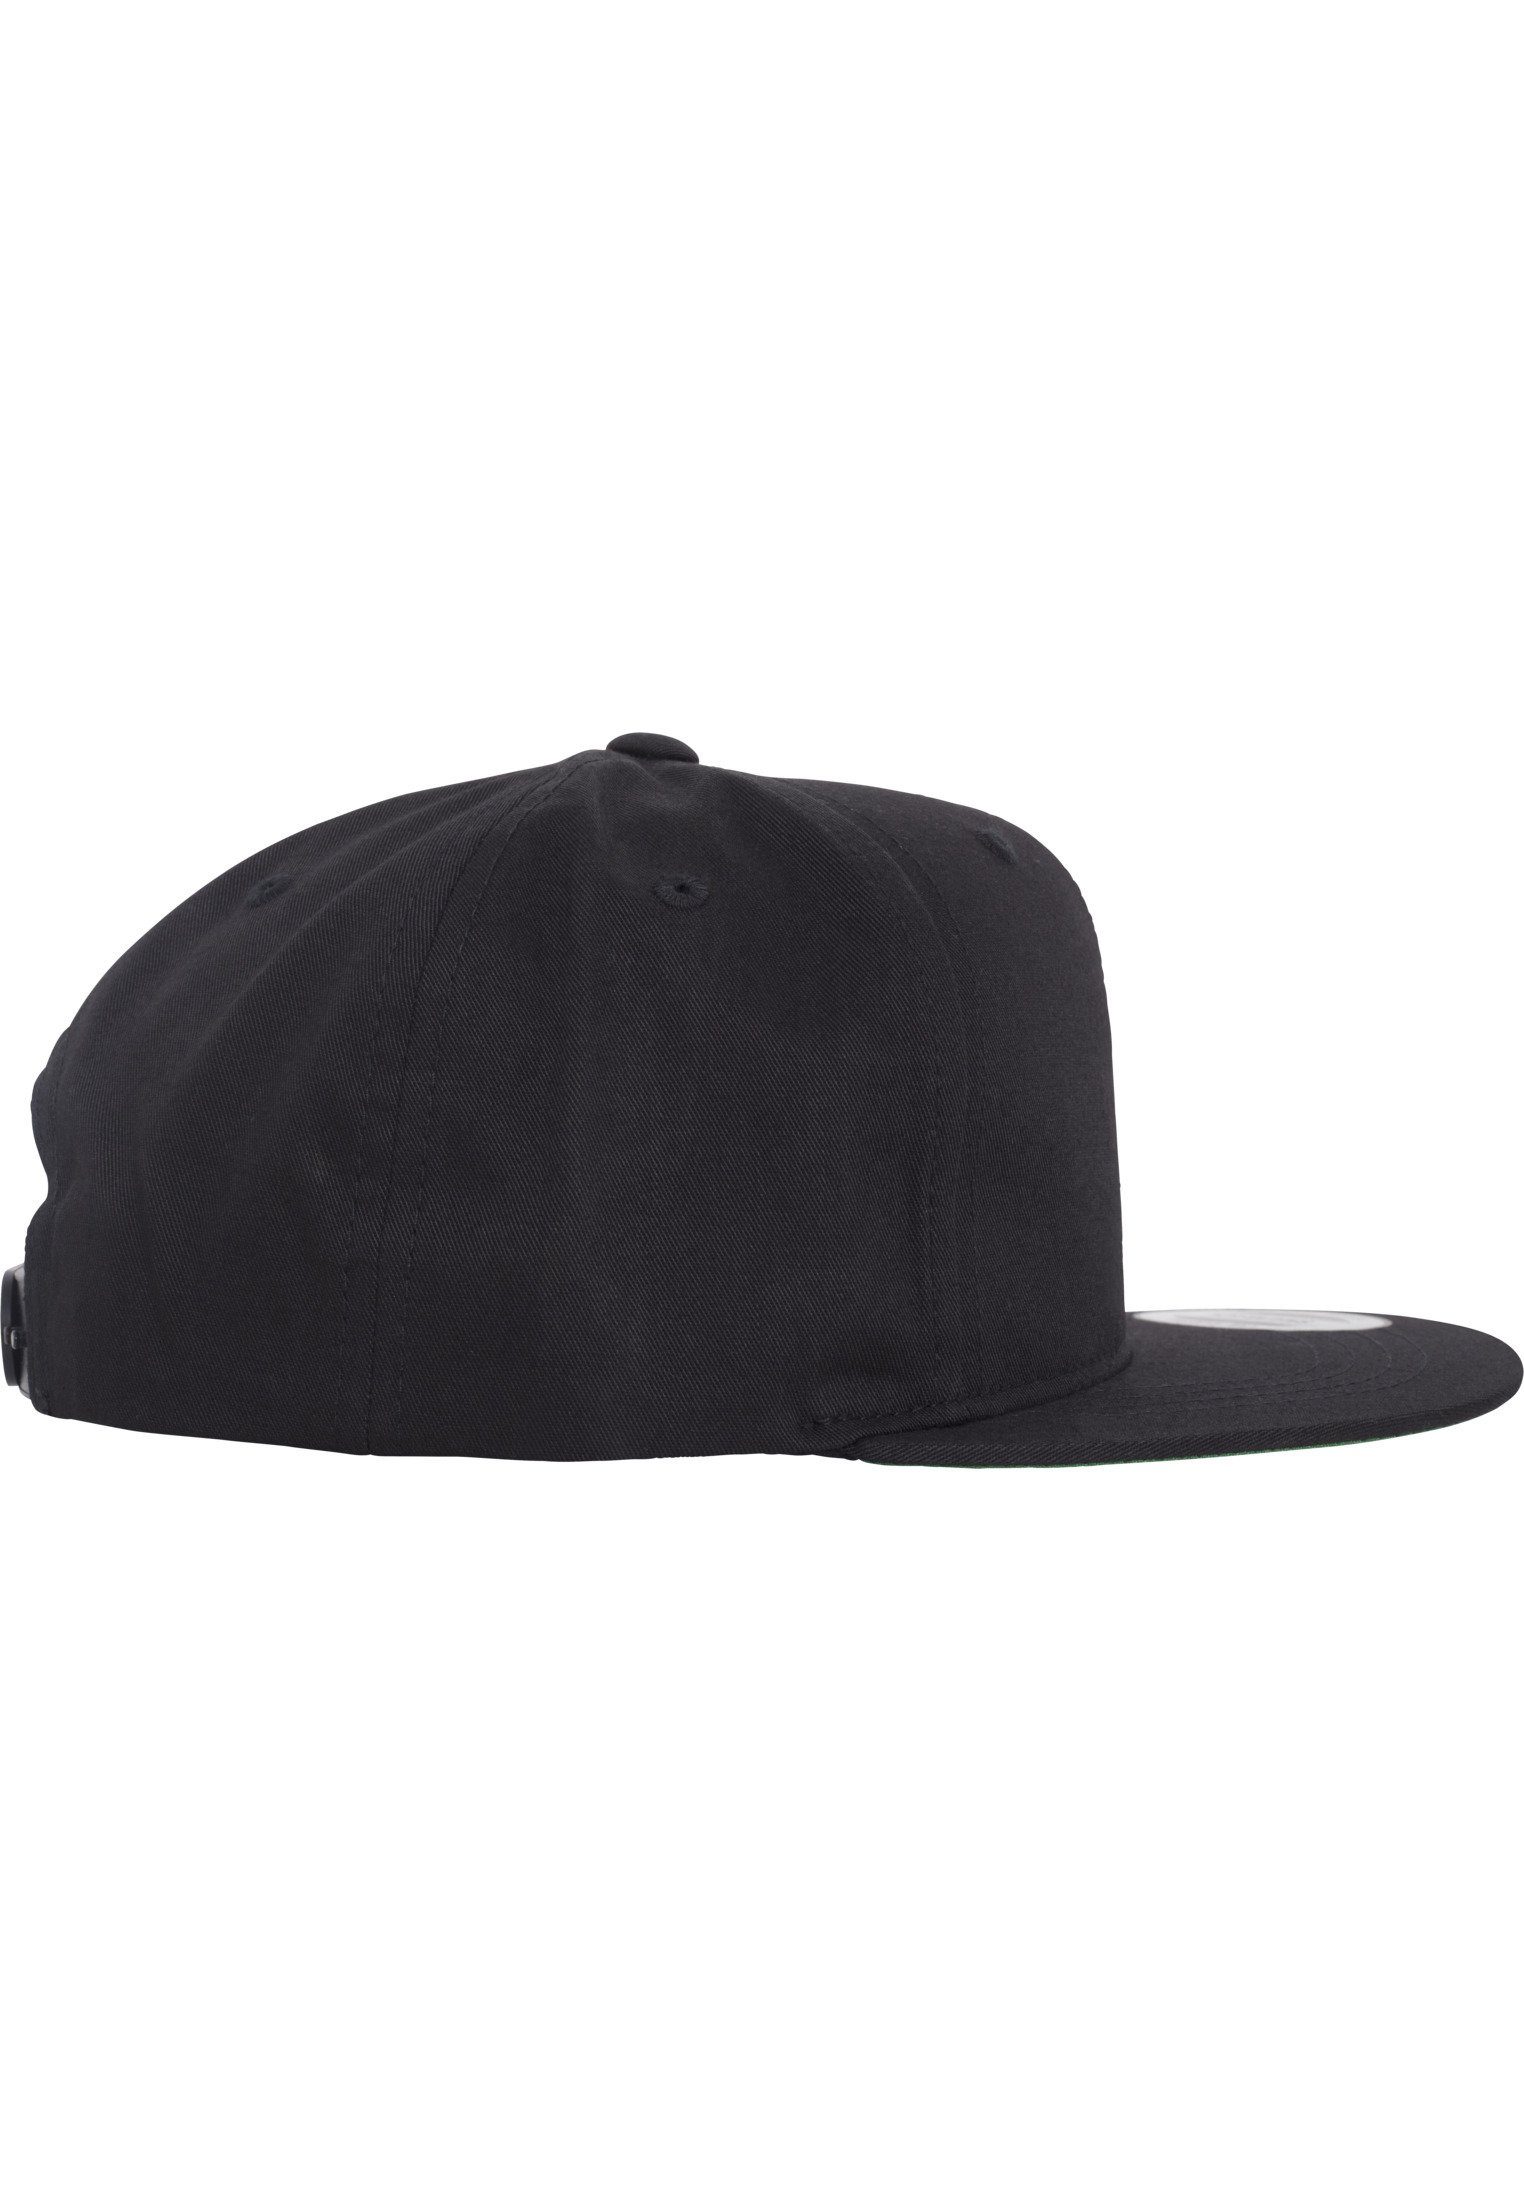 Flexfit Flex Cap Snapback Pro-Style Snapback black Twill Youth Cap